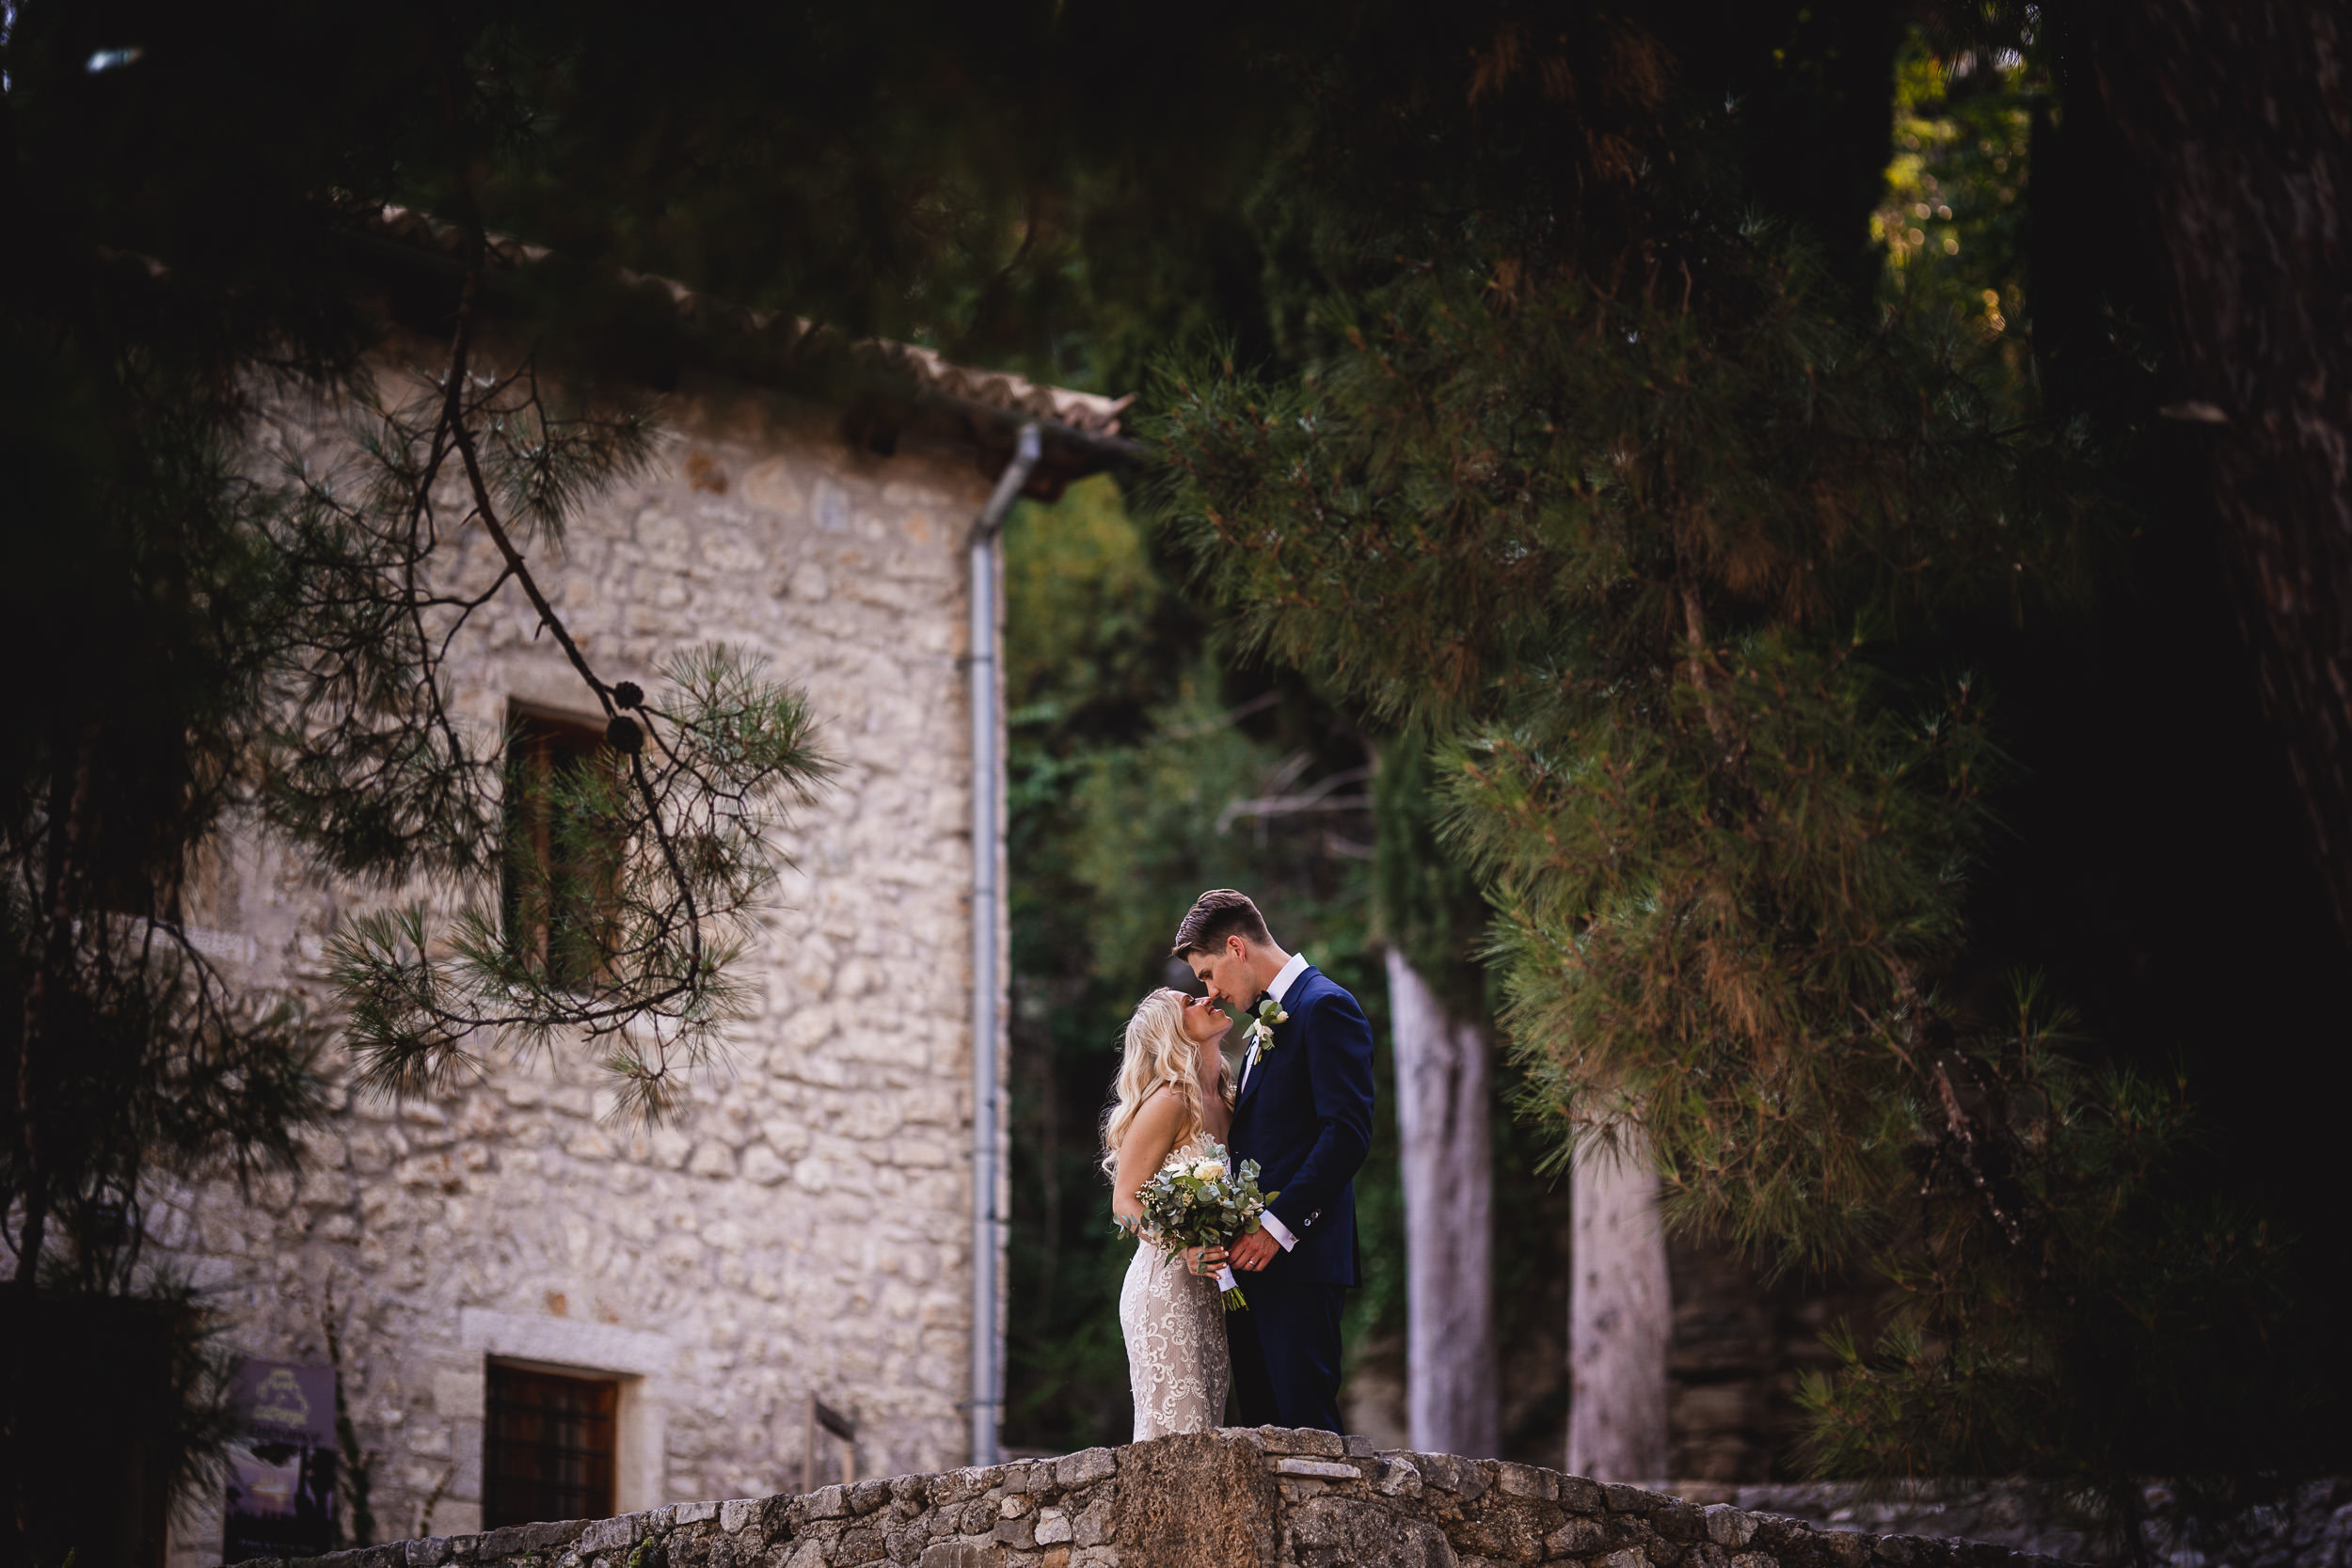 A wedding couple posing on a stone wall near a stone house.